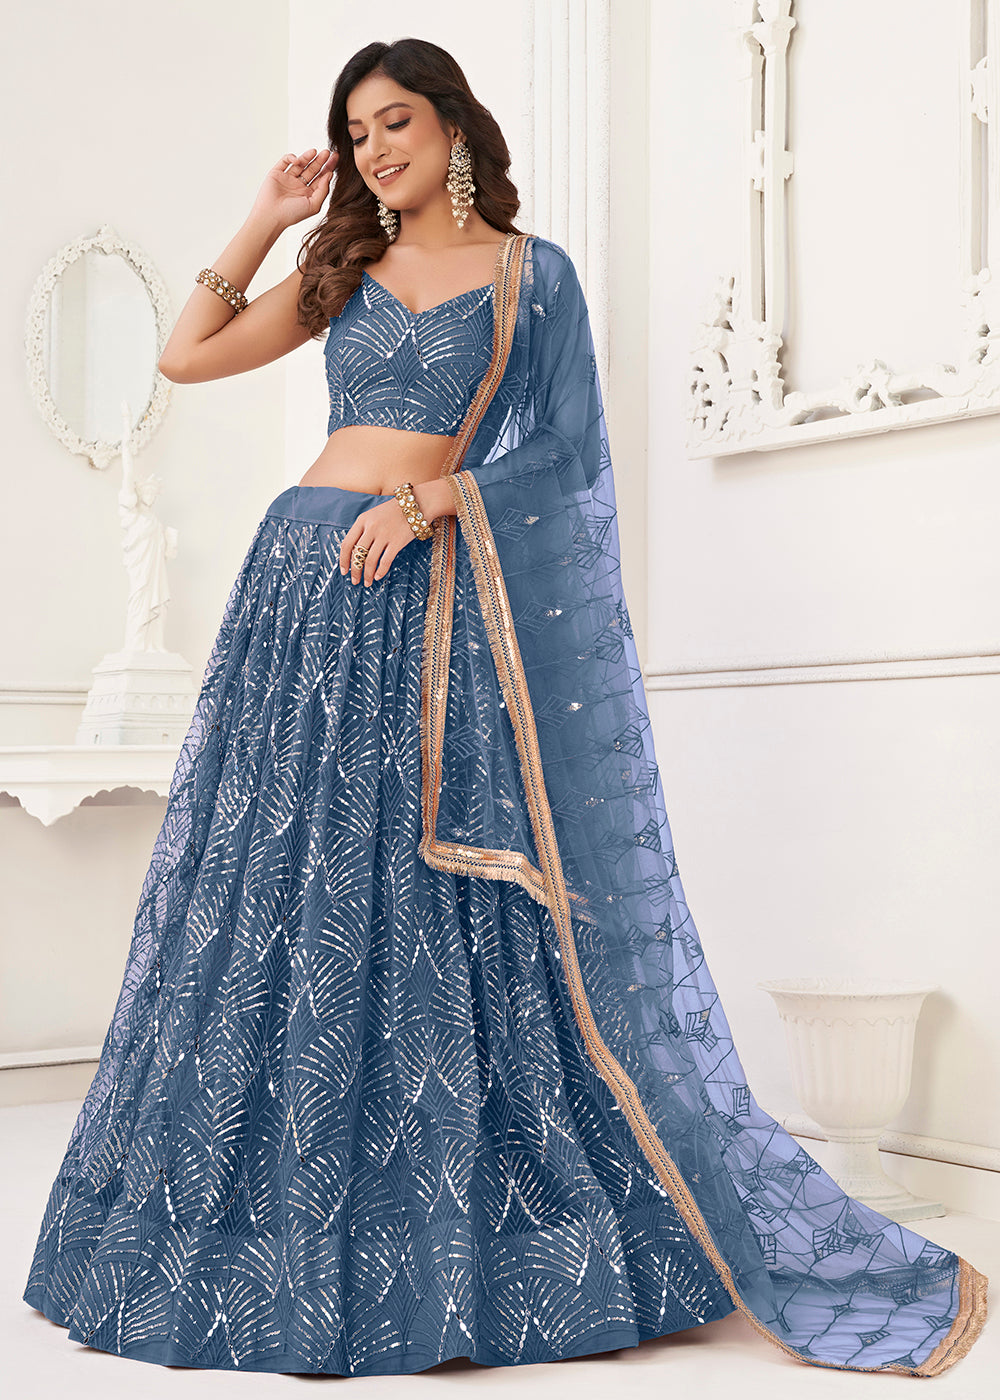 Buy Now Embroidered Net Stone Blue Sangeet & Mehndi Wedding Lehenga Choli Online in USA, UK, Canada & Worldwide at Empress Clothing.